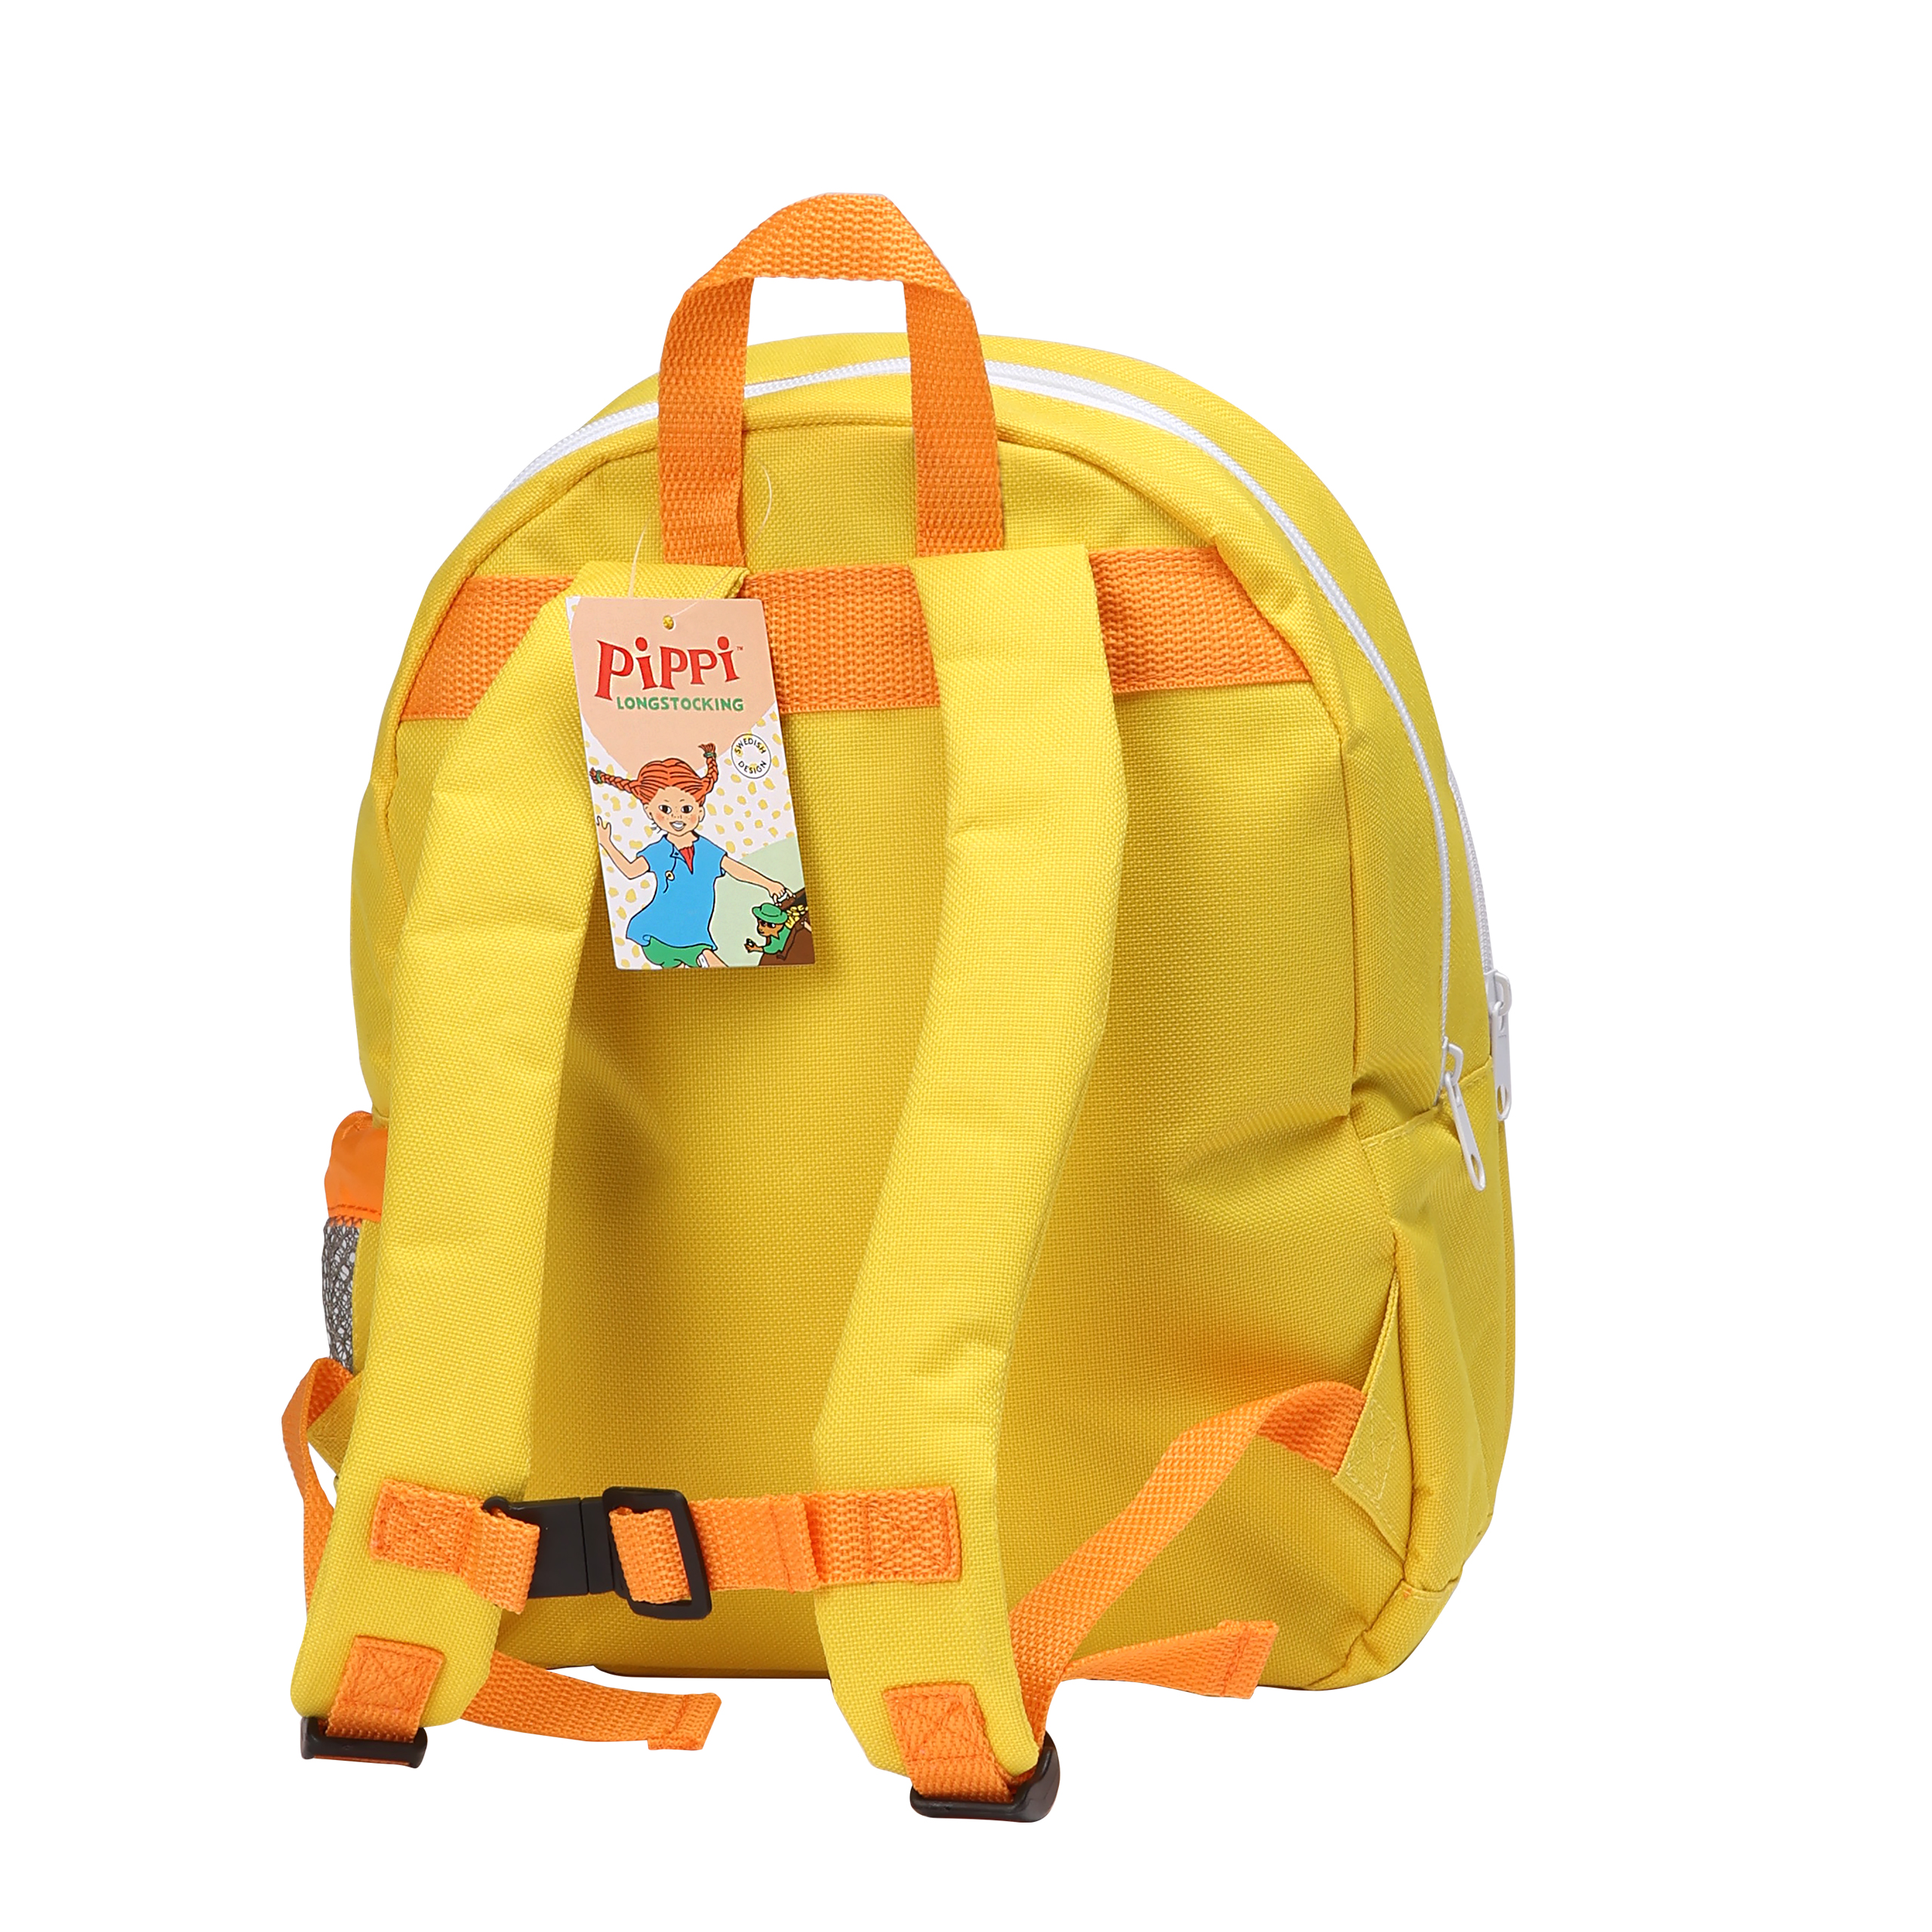 Pippi pippi kids bag backpack yellow